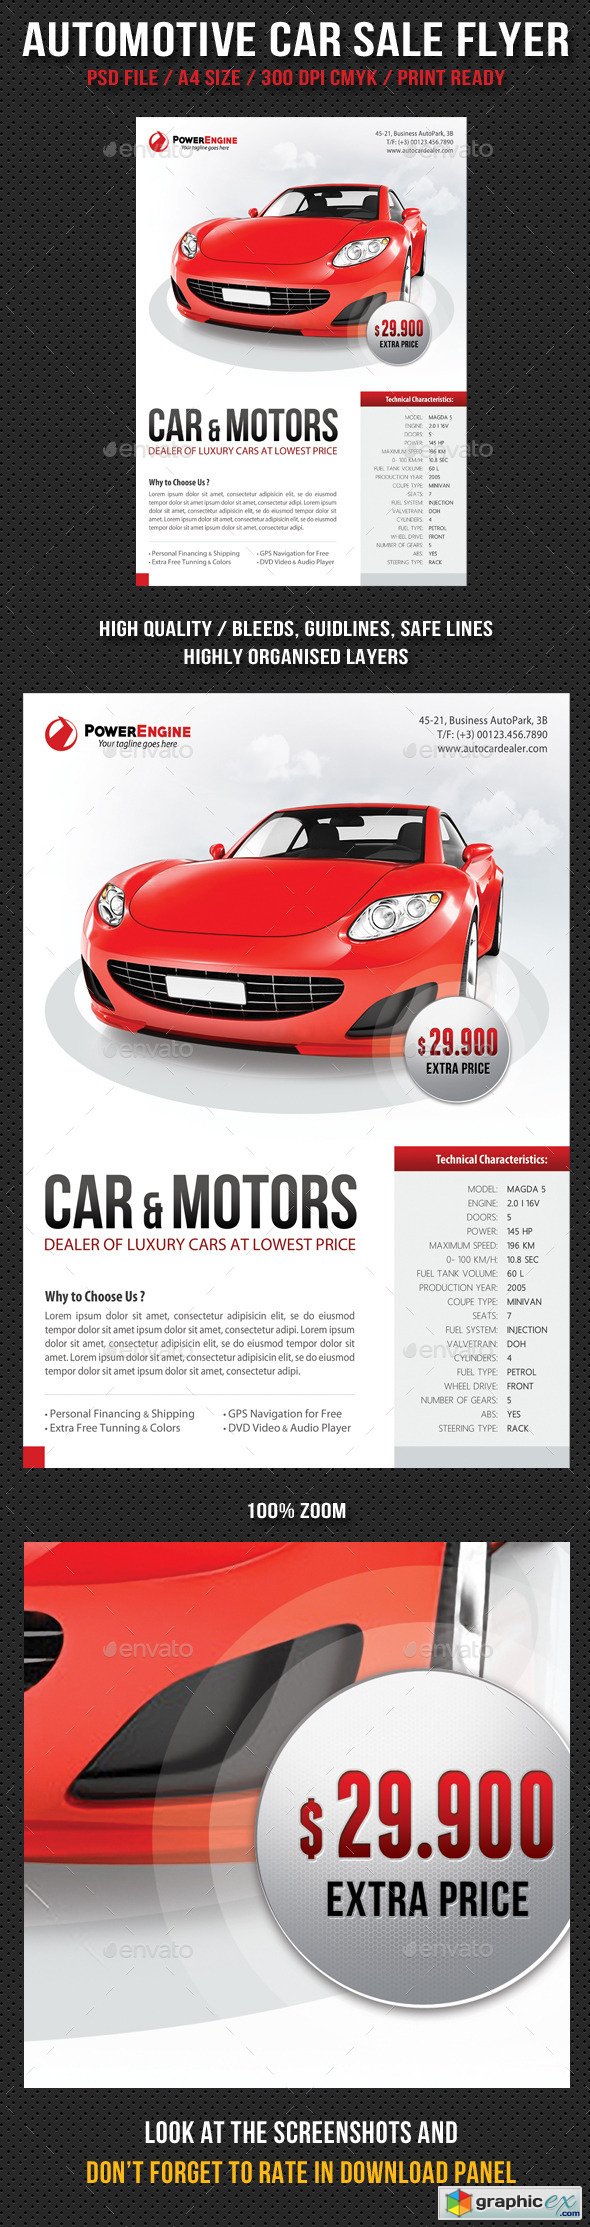 Automotive Car Sale Rental Flyer